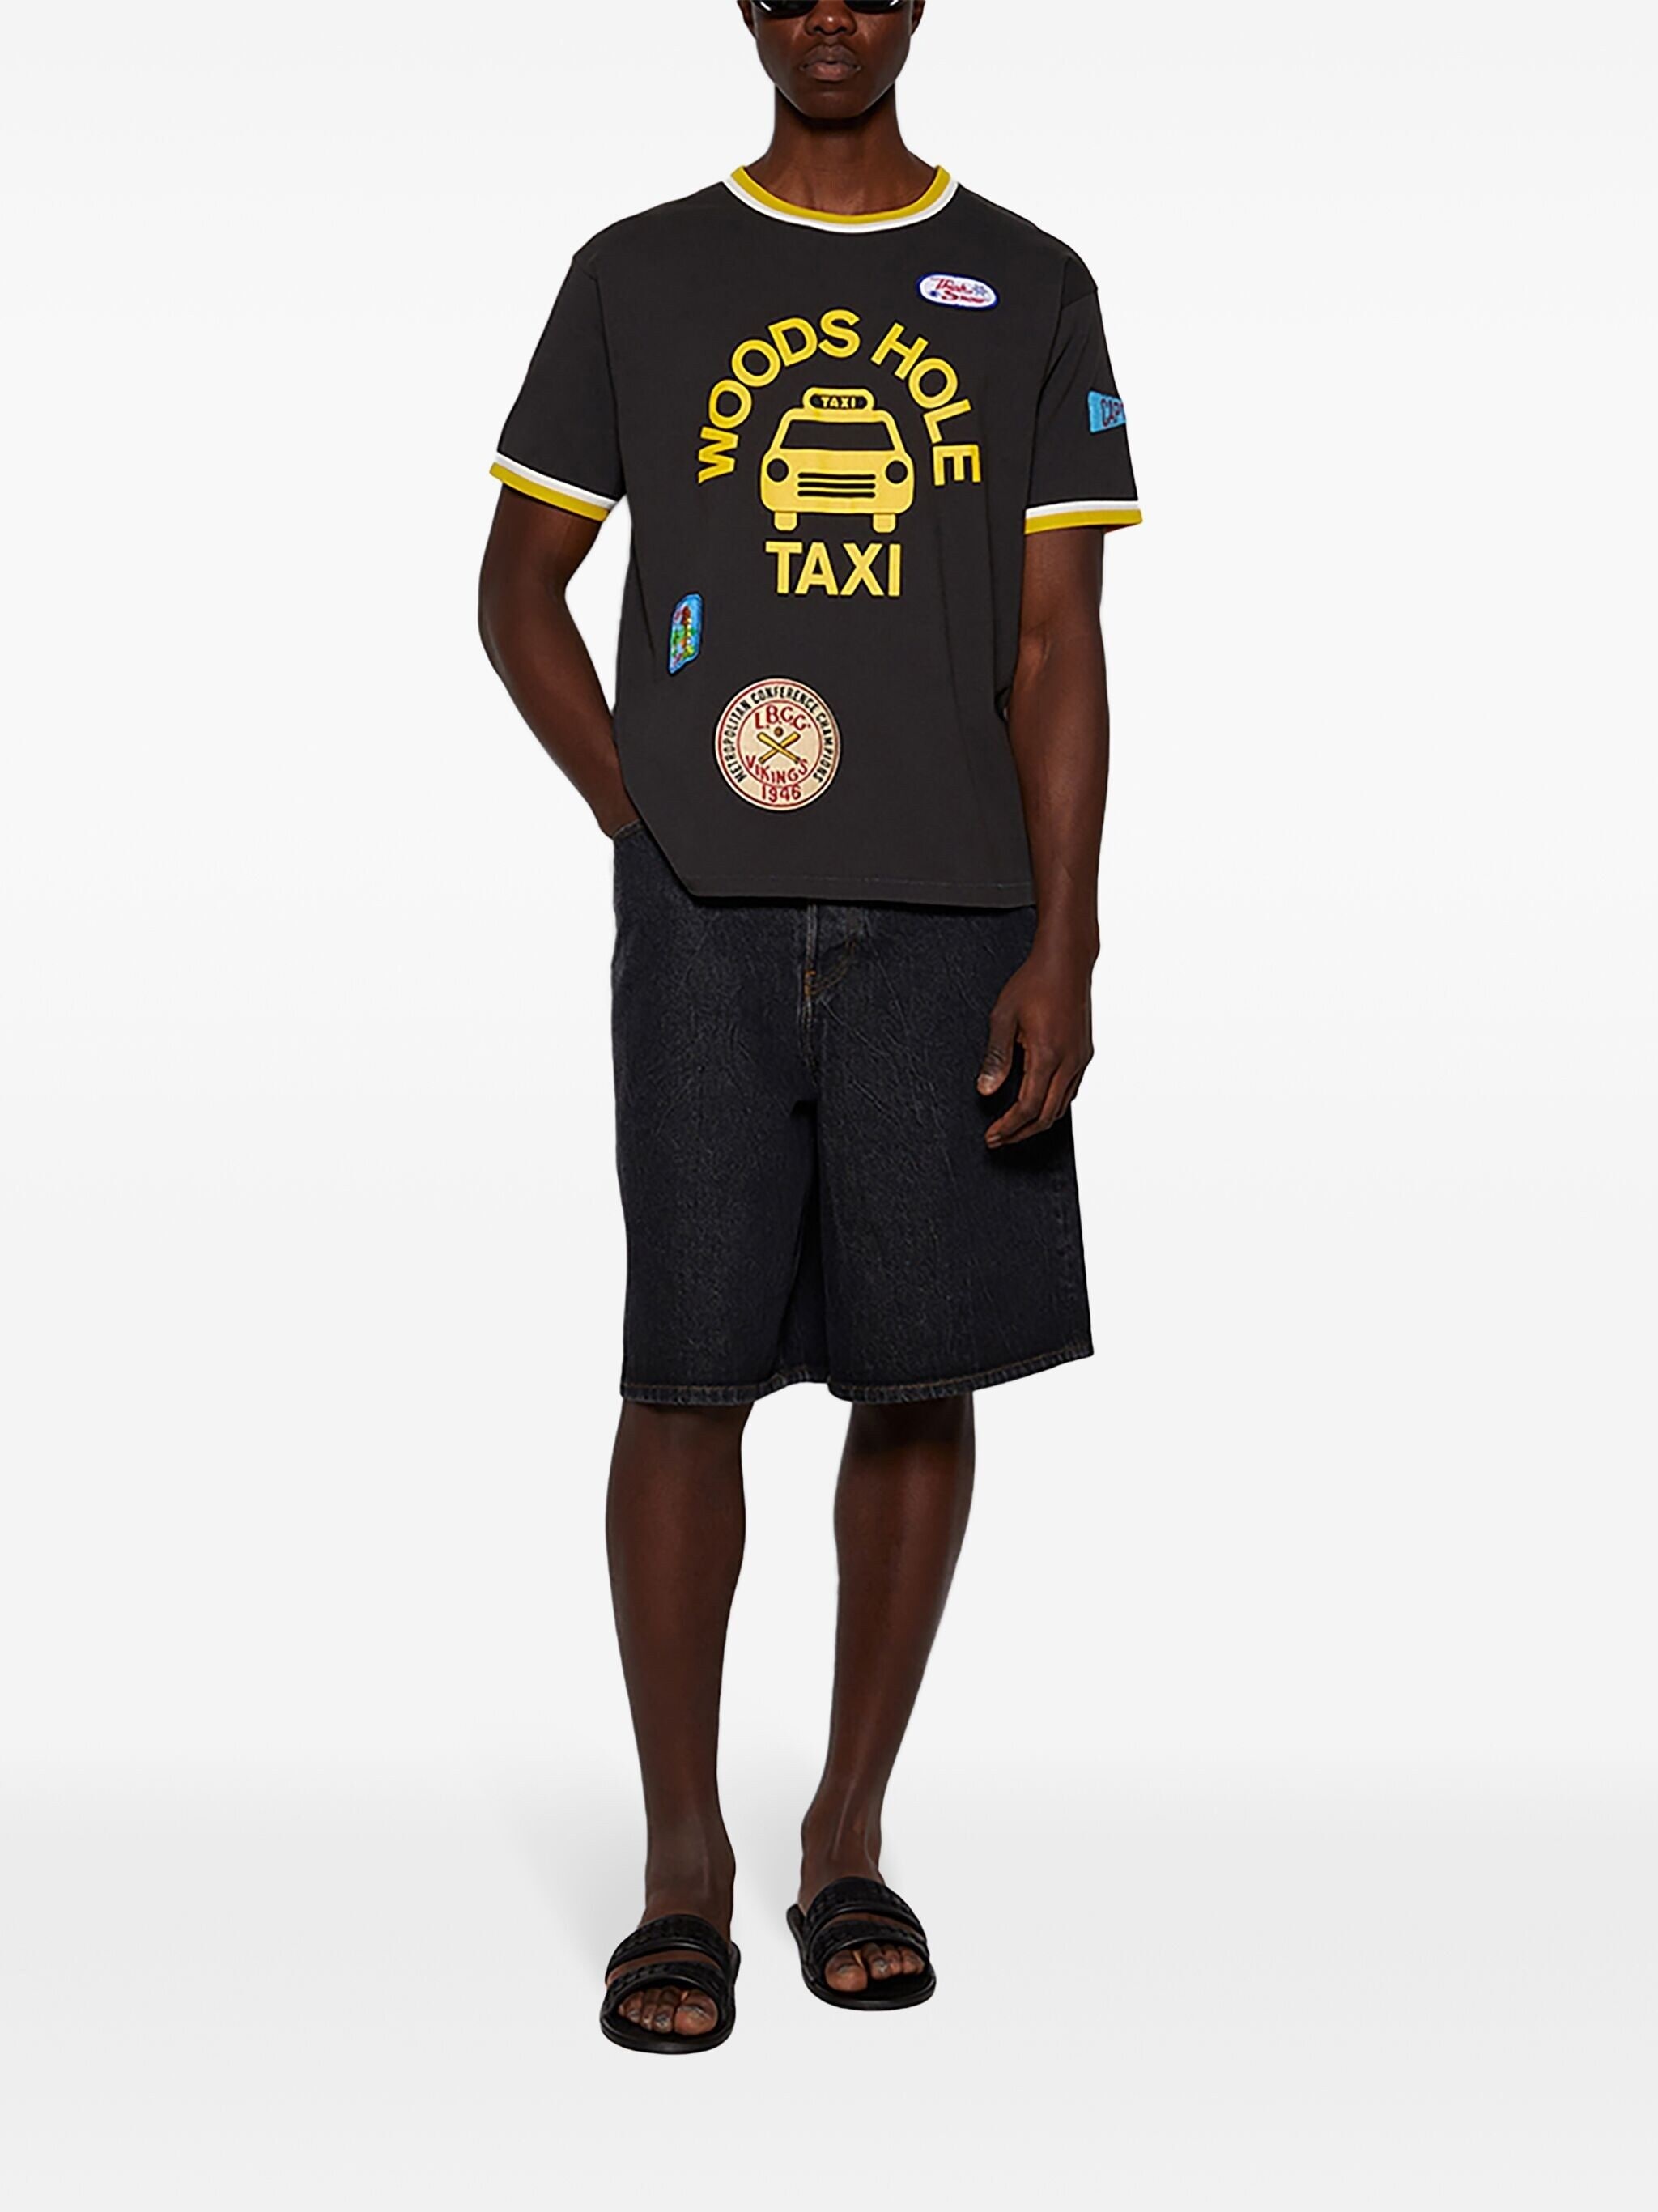 Discount Taxi cotton T-shirt - 2